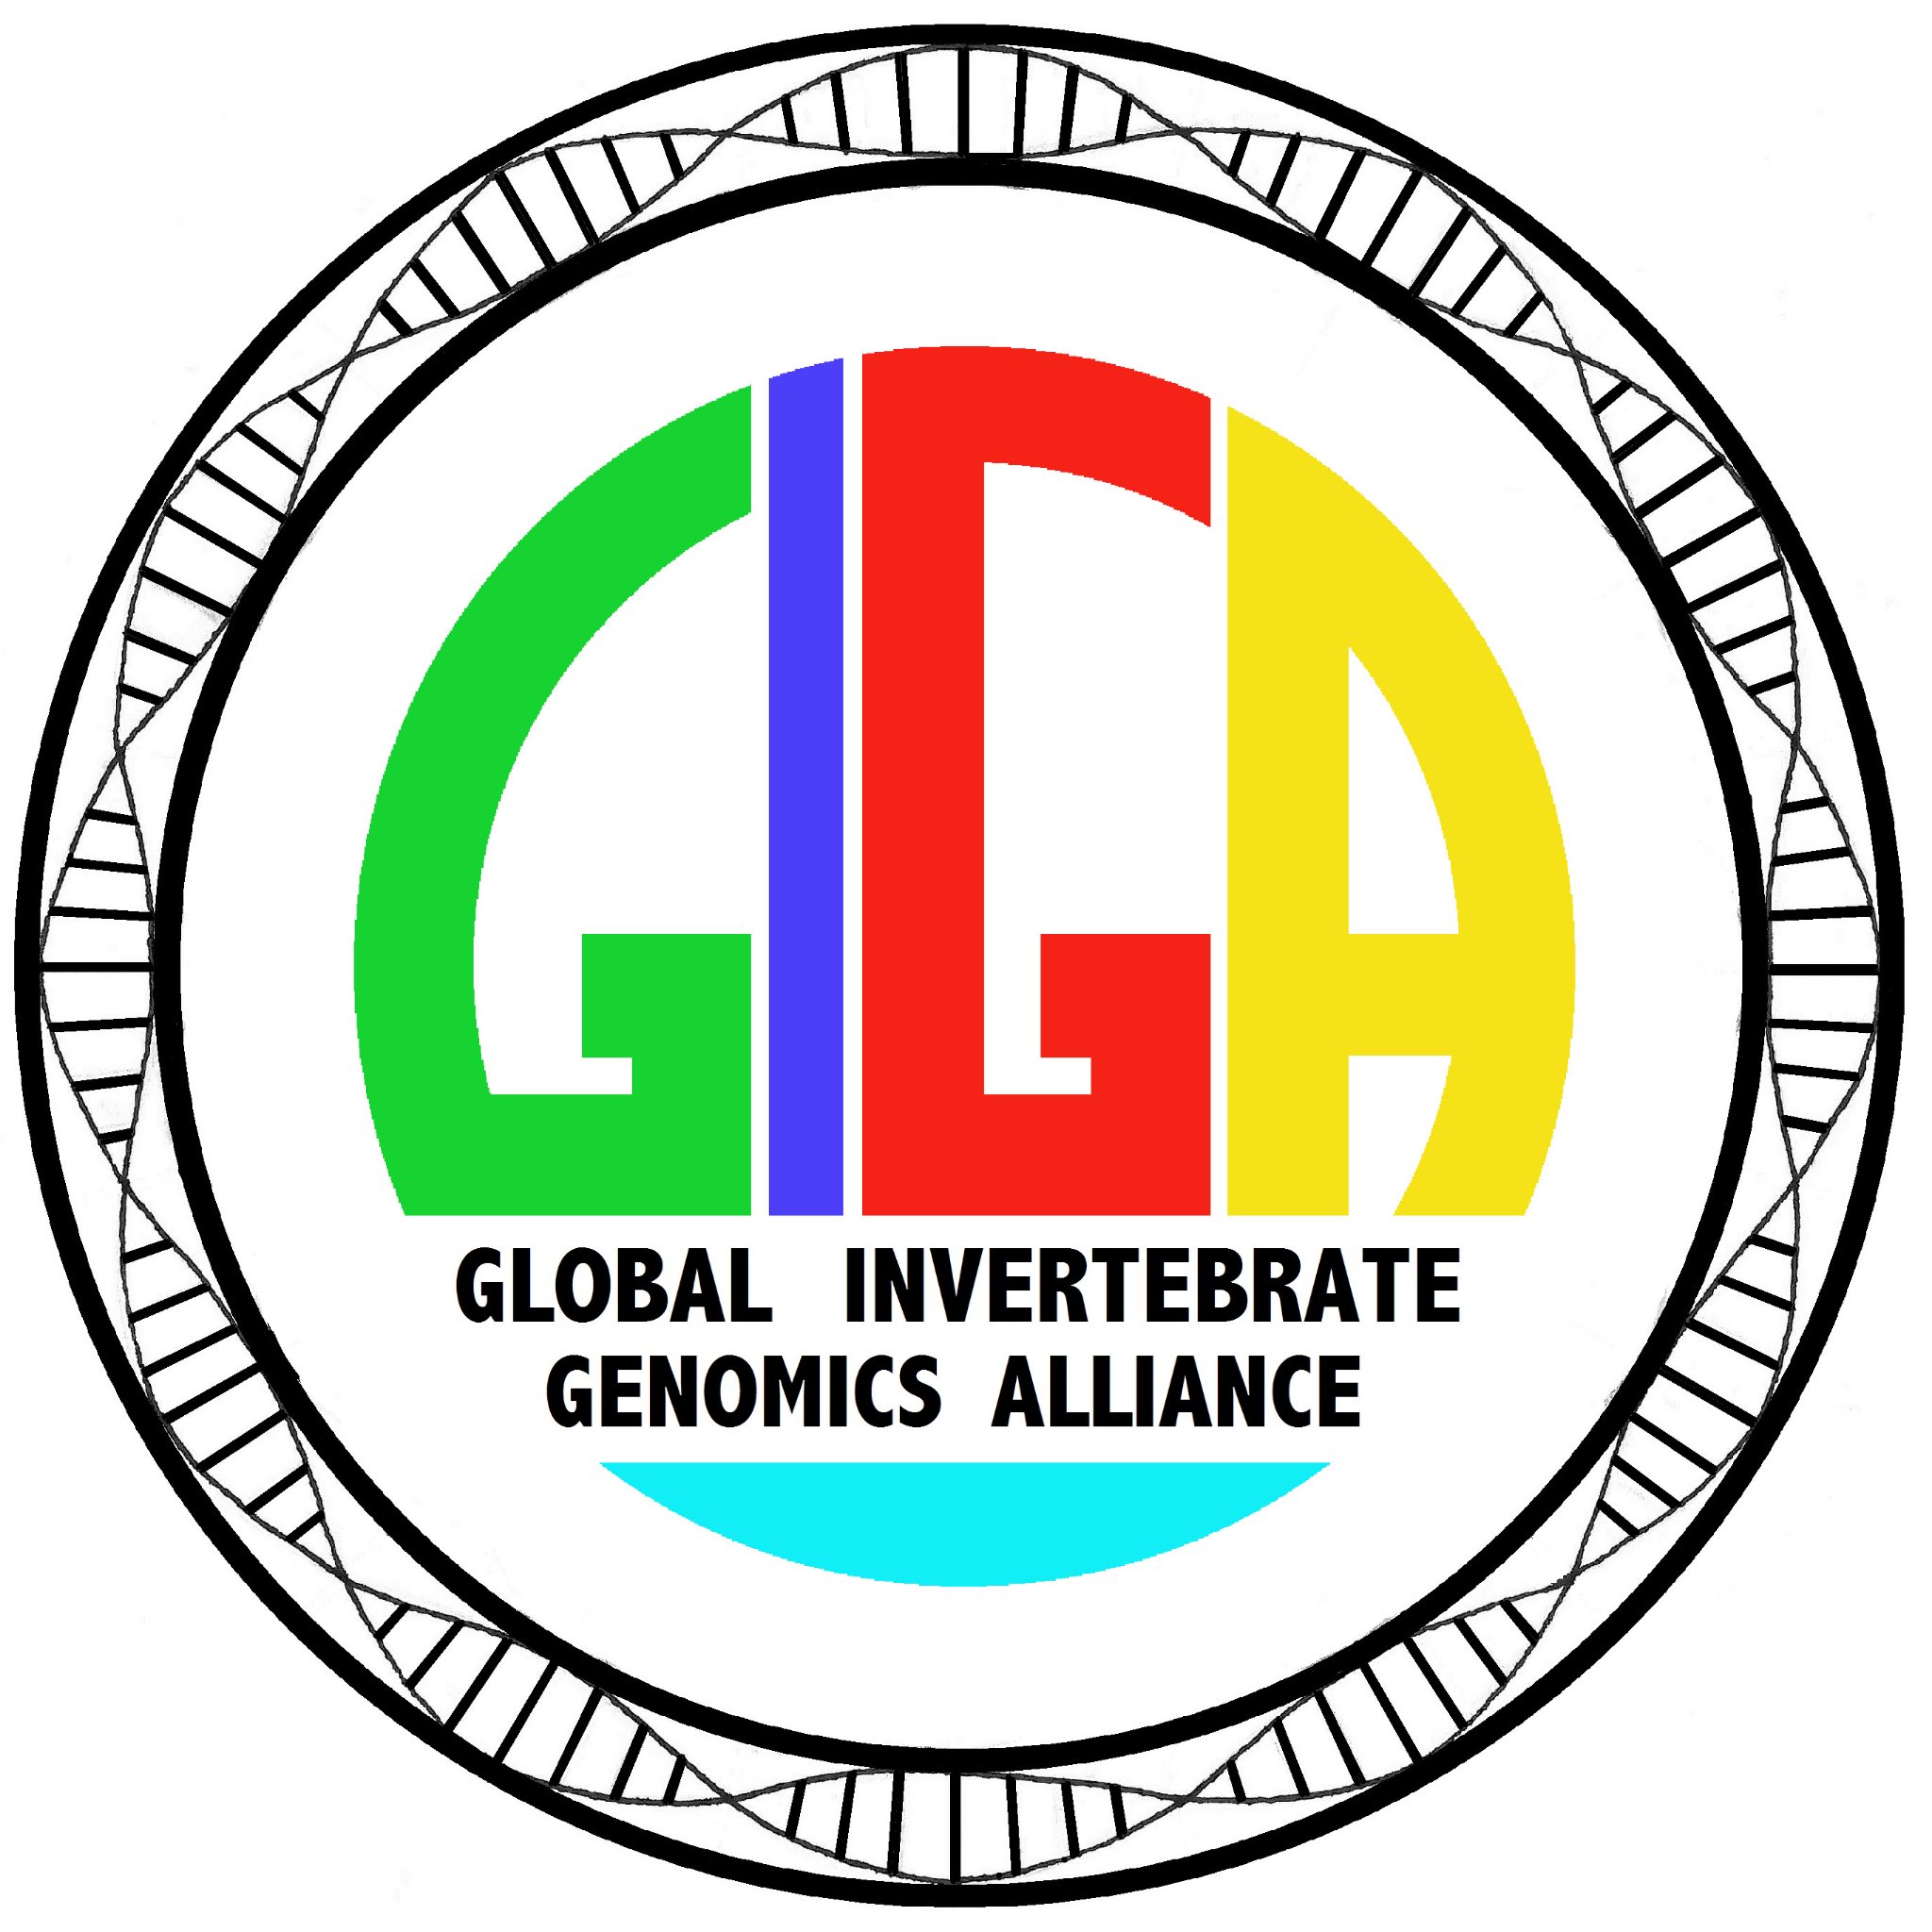 The Global Invertebrate Genomics Alliance (GIGA) is a collaborative, nonprofit network of diverse scientists studying invertebrate animal genomics.